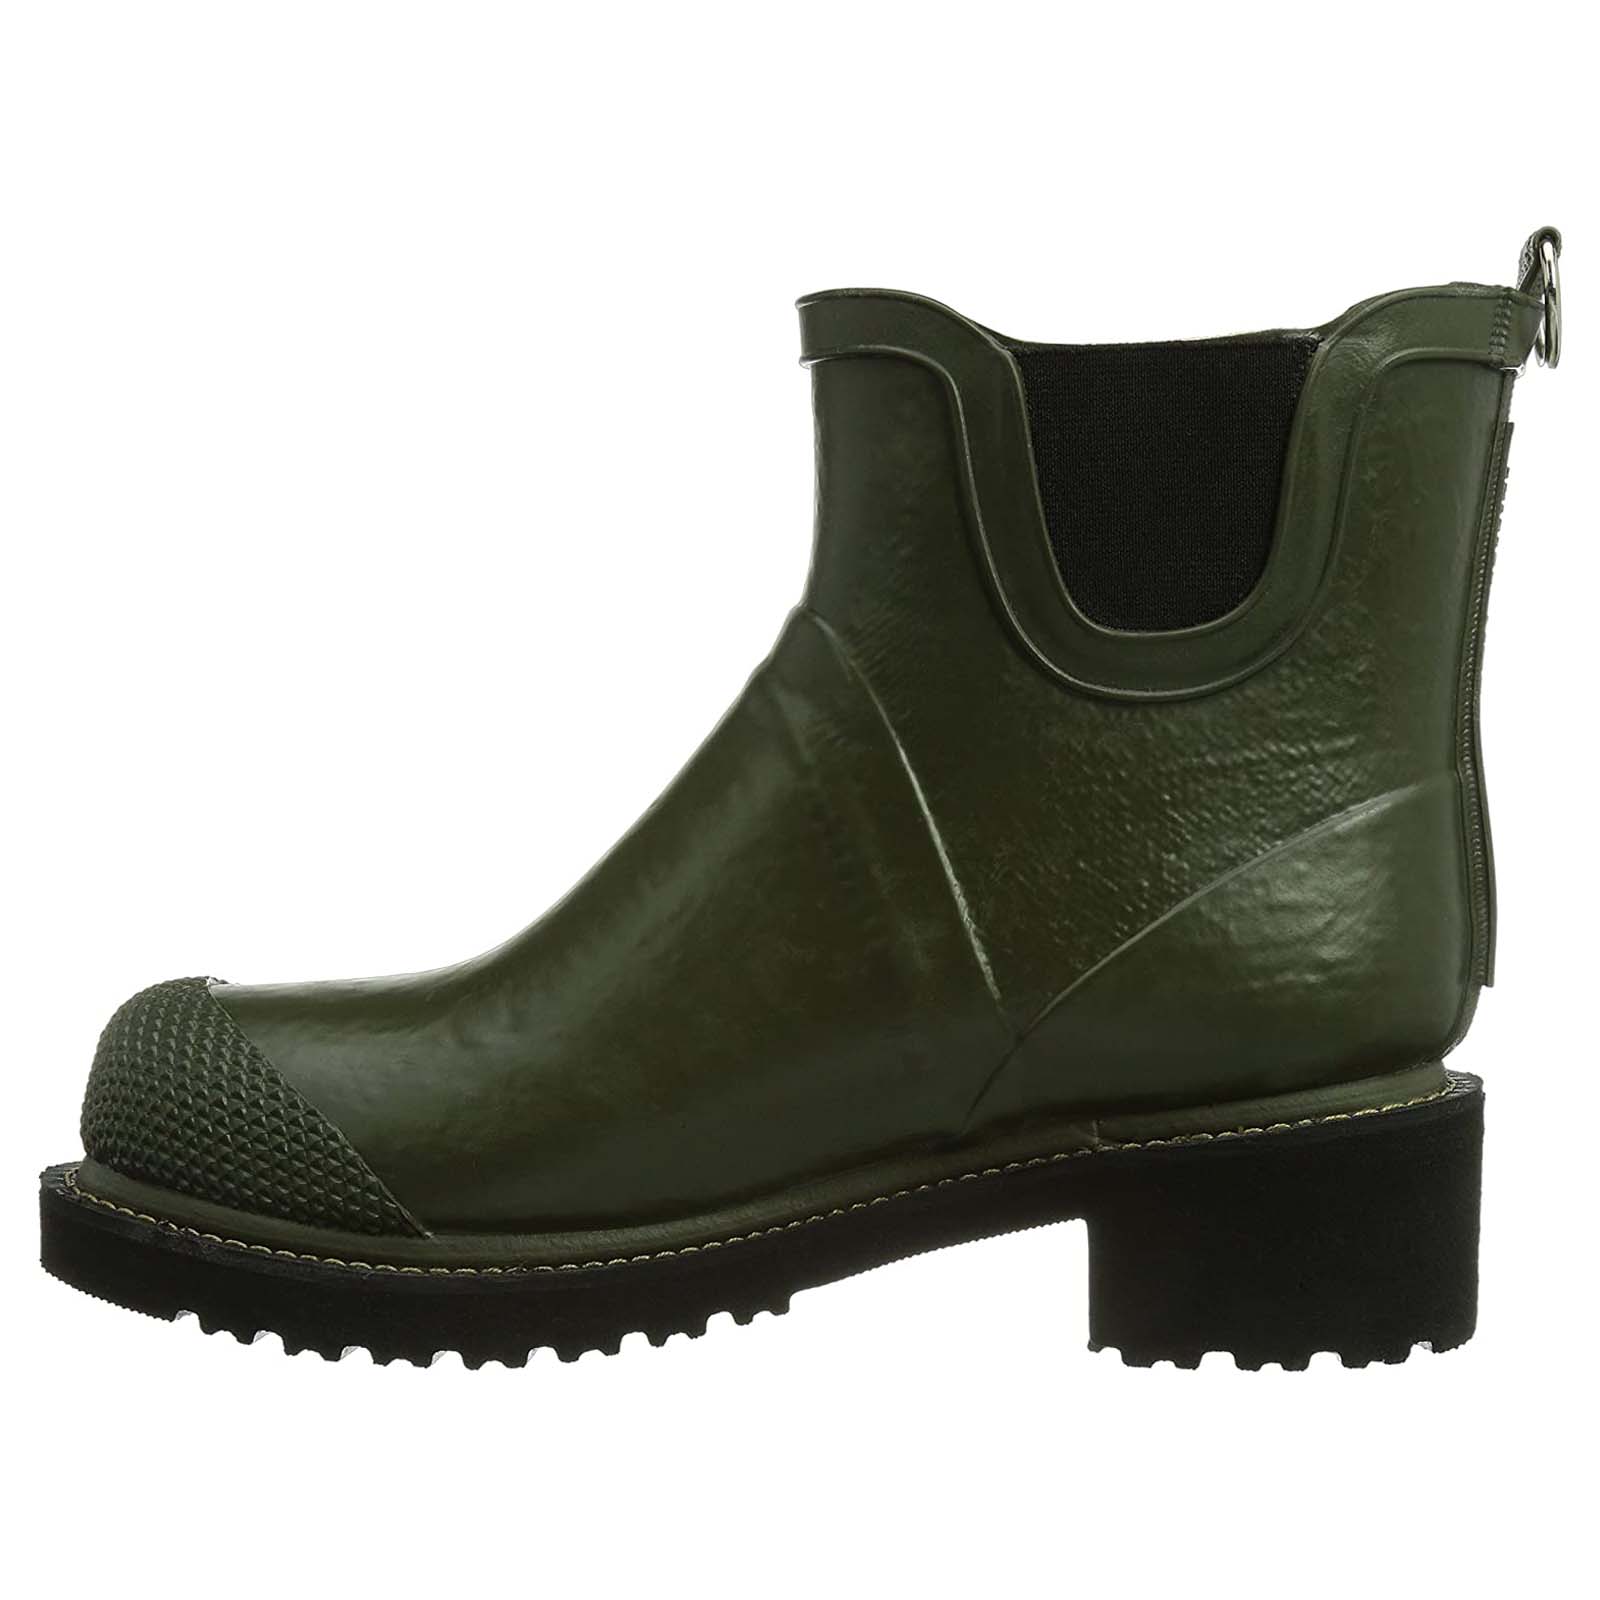 Ilse Jacobsen Womens Boots Rub47 Chelsea - UK 7.5